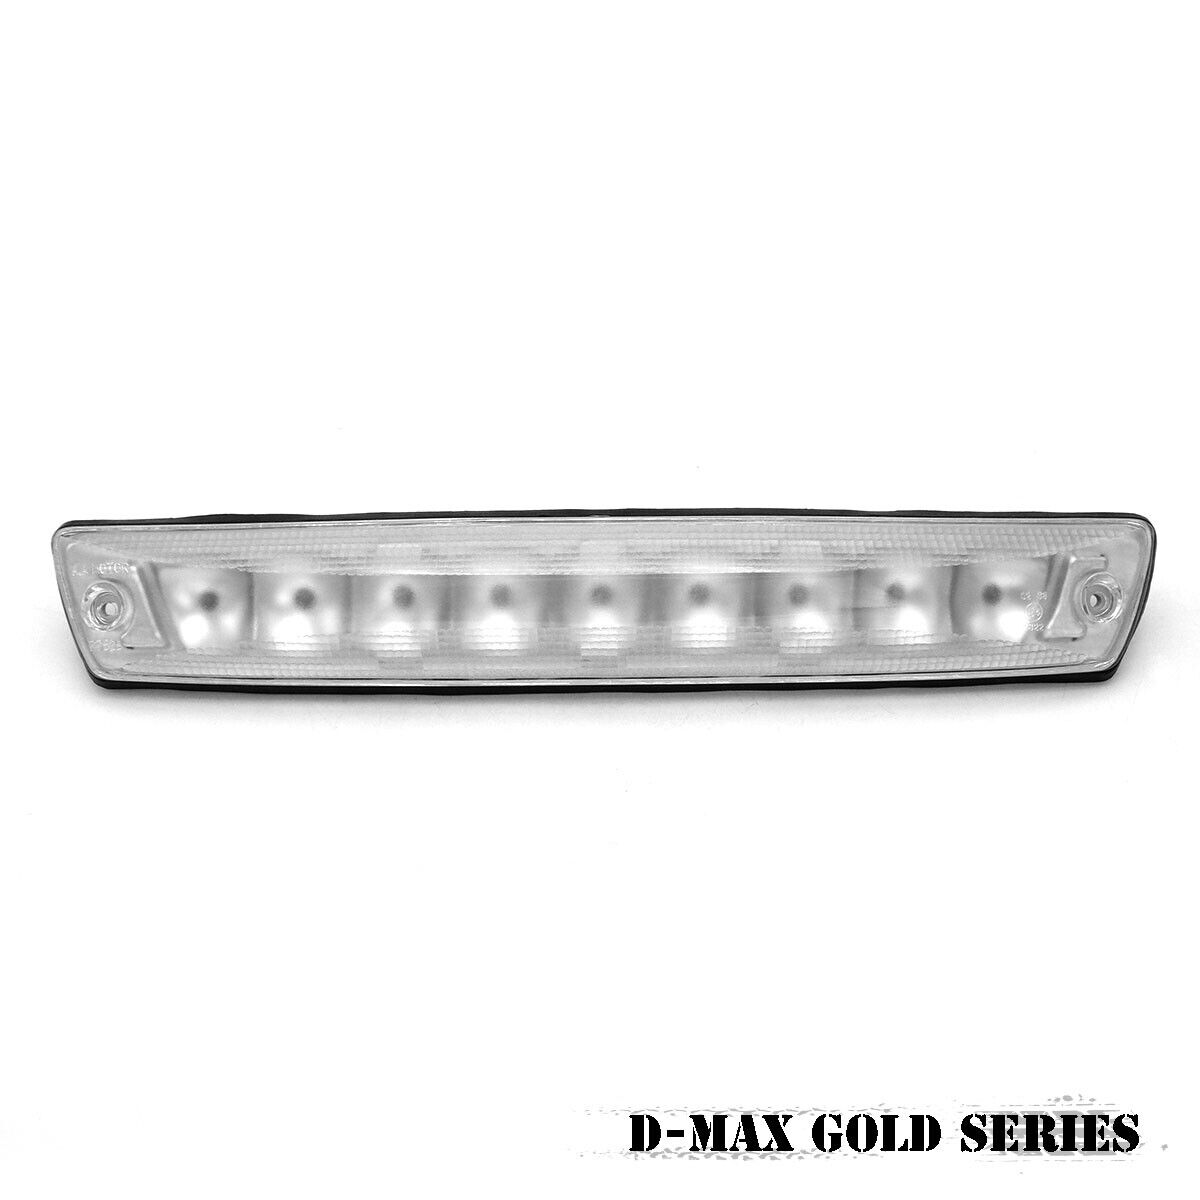 Clear LED Third Brake Light For Isuzu Holden D-Max Gold series 2007 - 2011